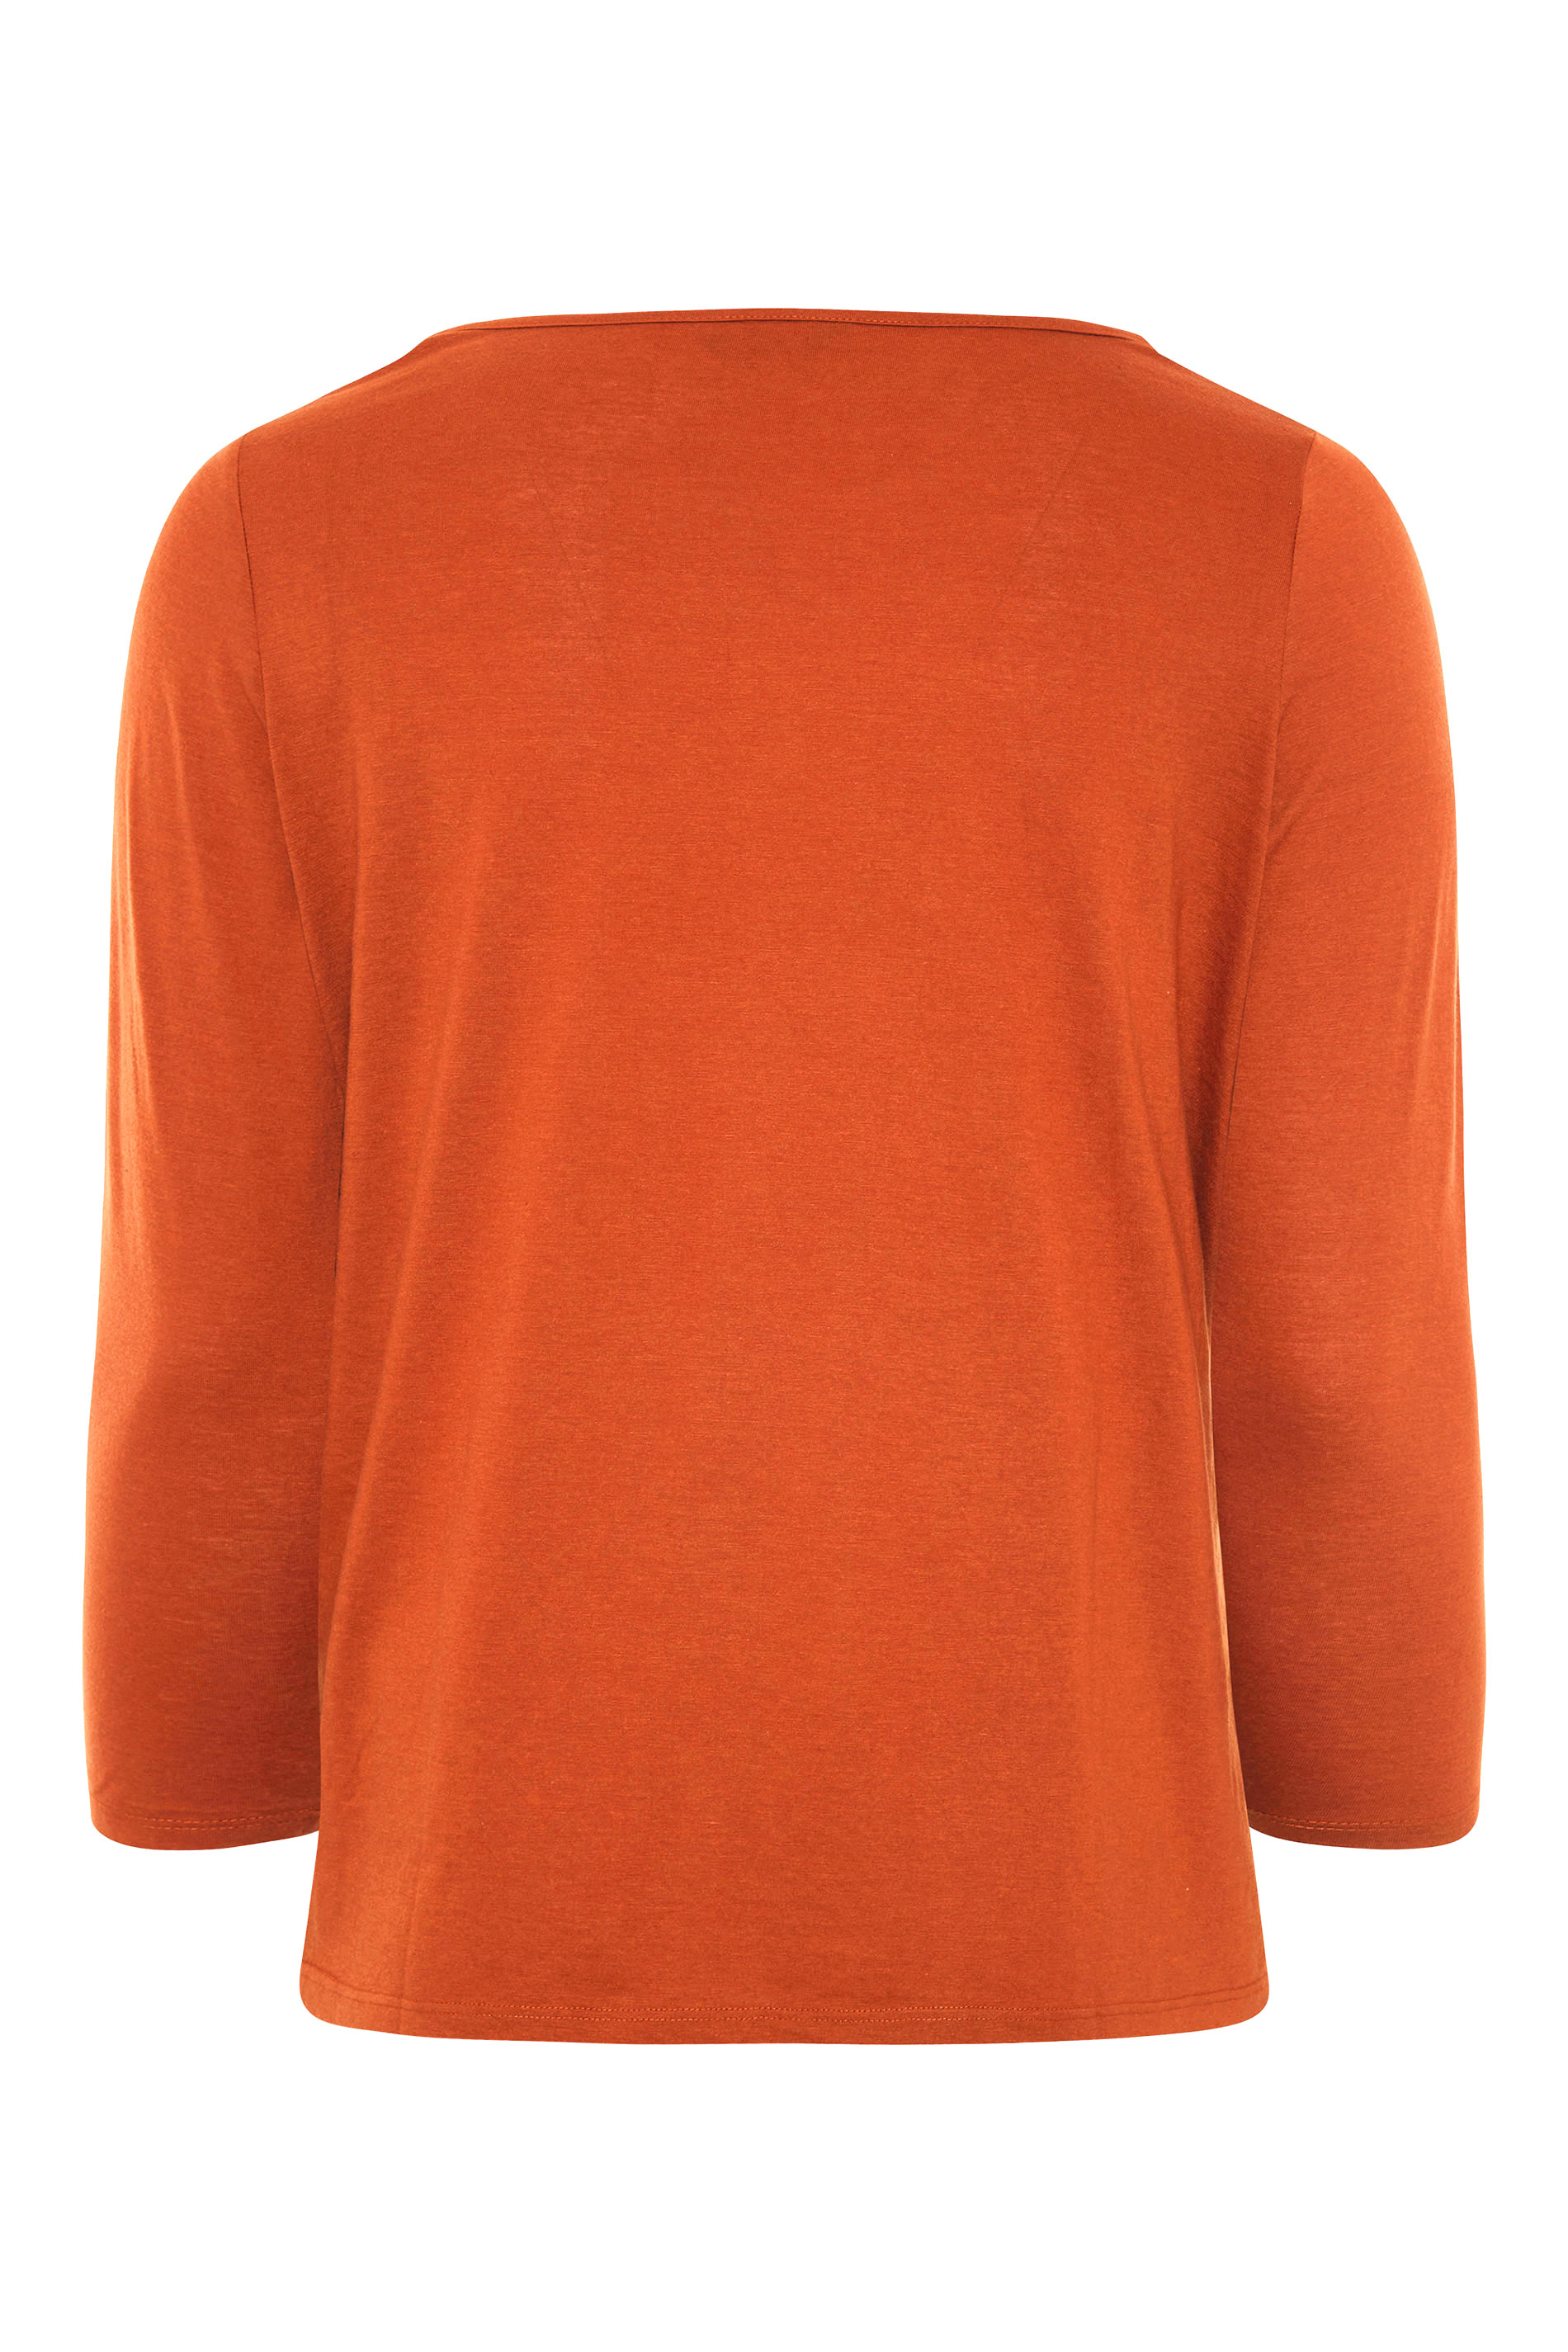 Plus Size Burnt Orange Scoop Neck Top | Yours Clothing